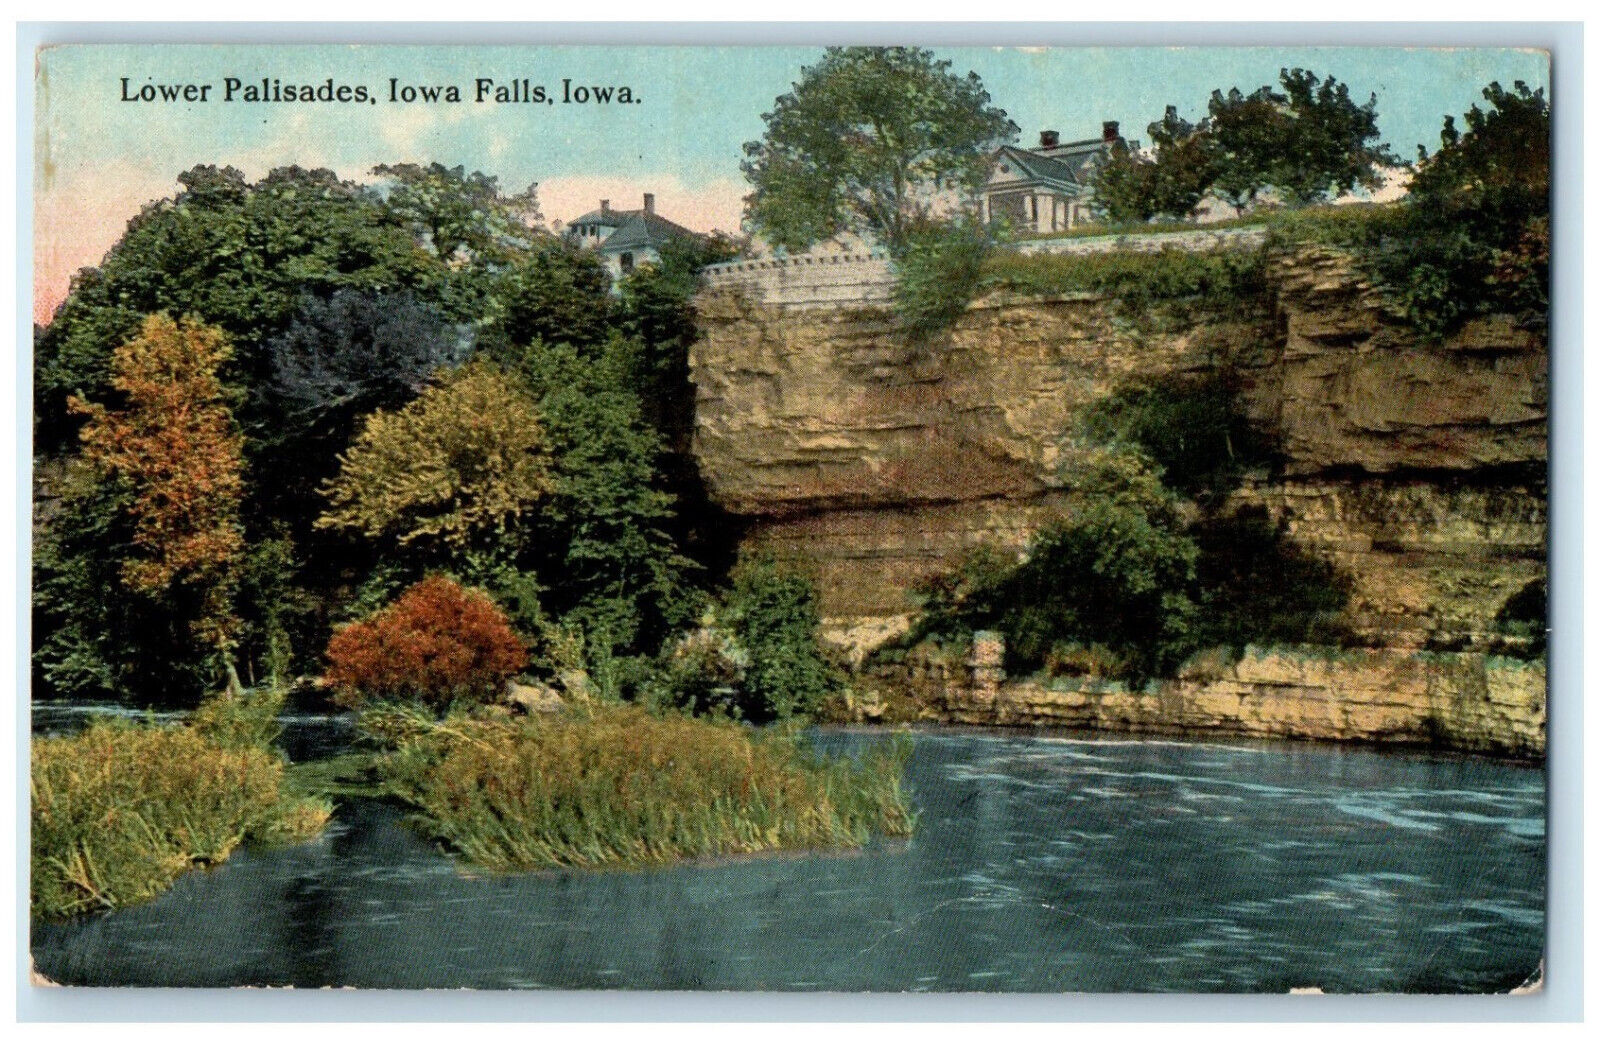 c1910 View of Lower Palisades Iowa Falls Iowa IA Antique Unposted Postcard